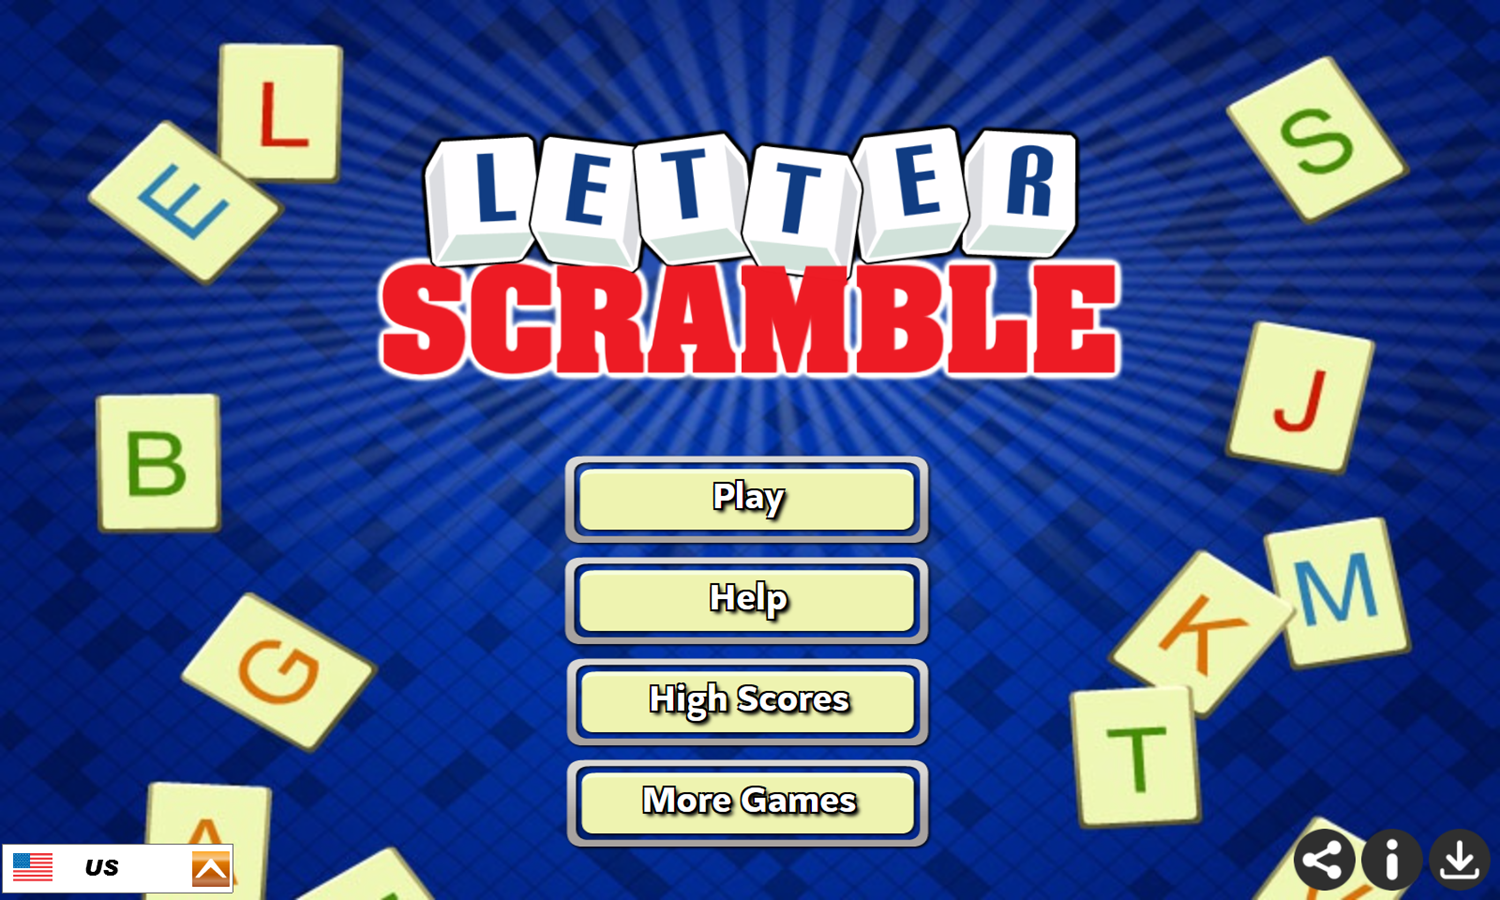 Letter Scramble Game Welcome Screen Screenshot.